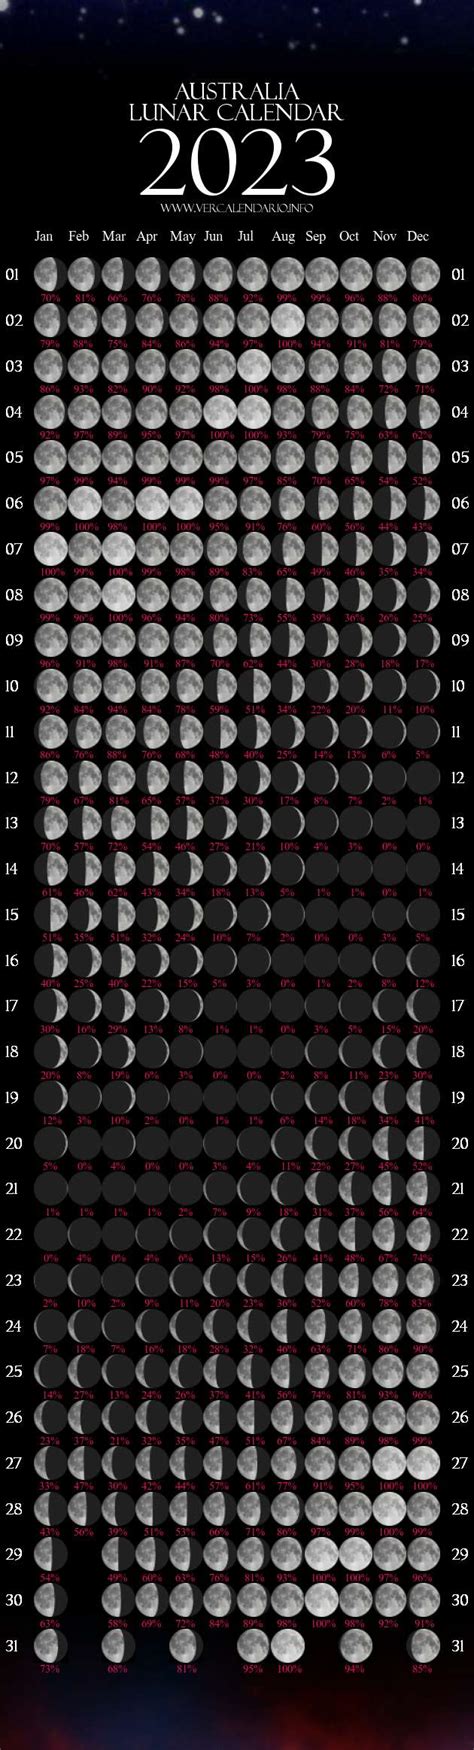 full moon calendar australia 2023